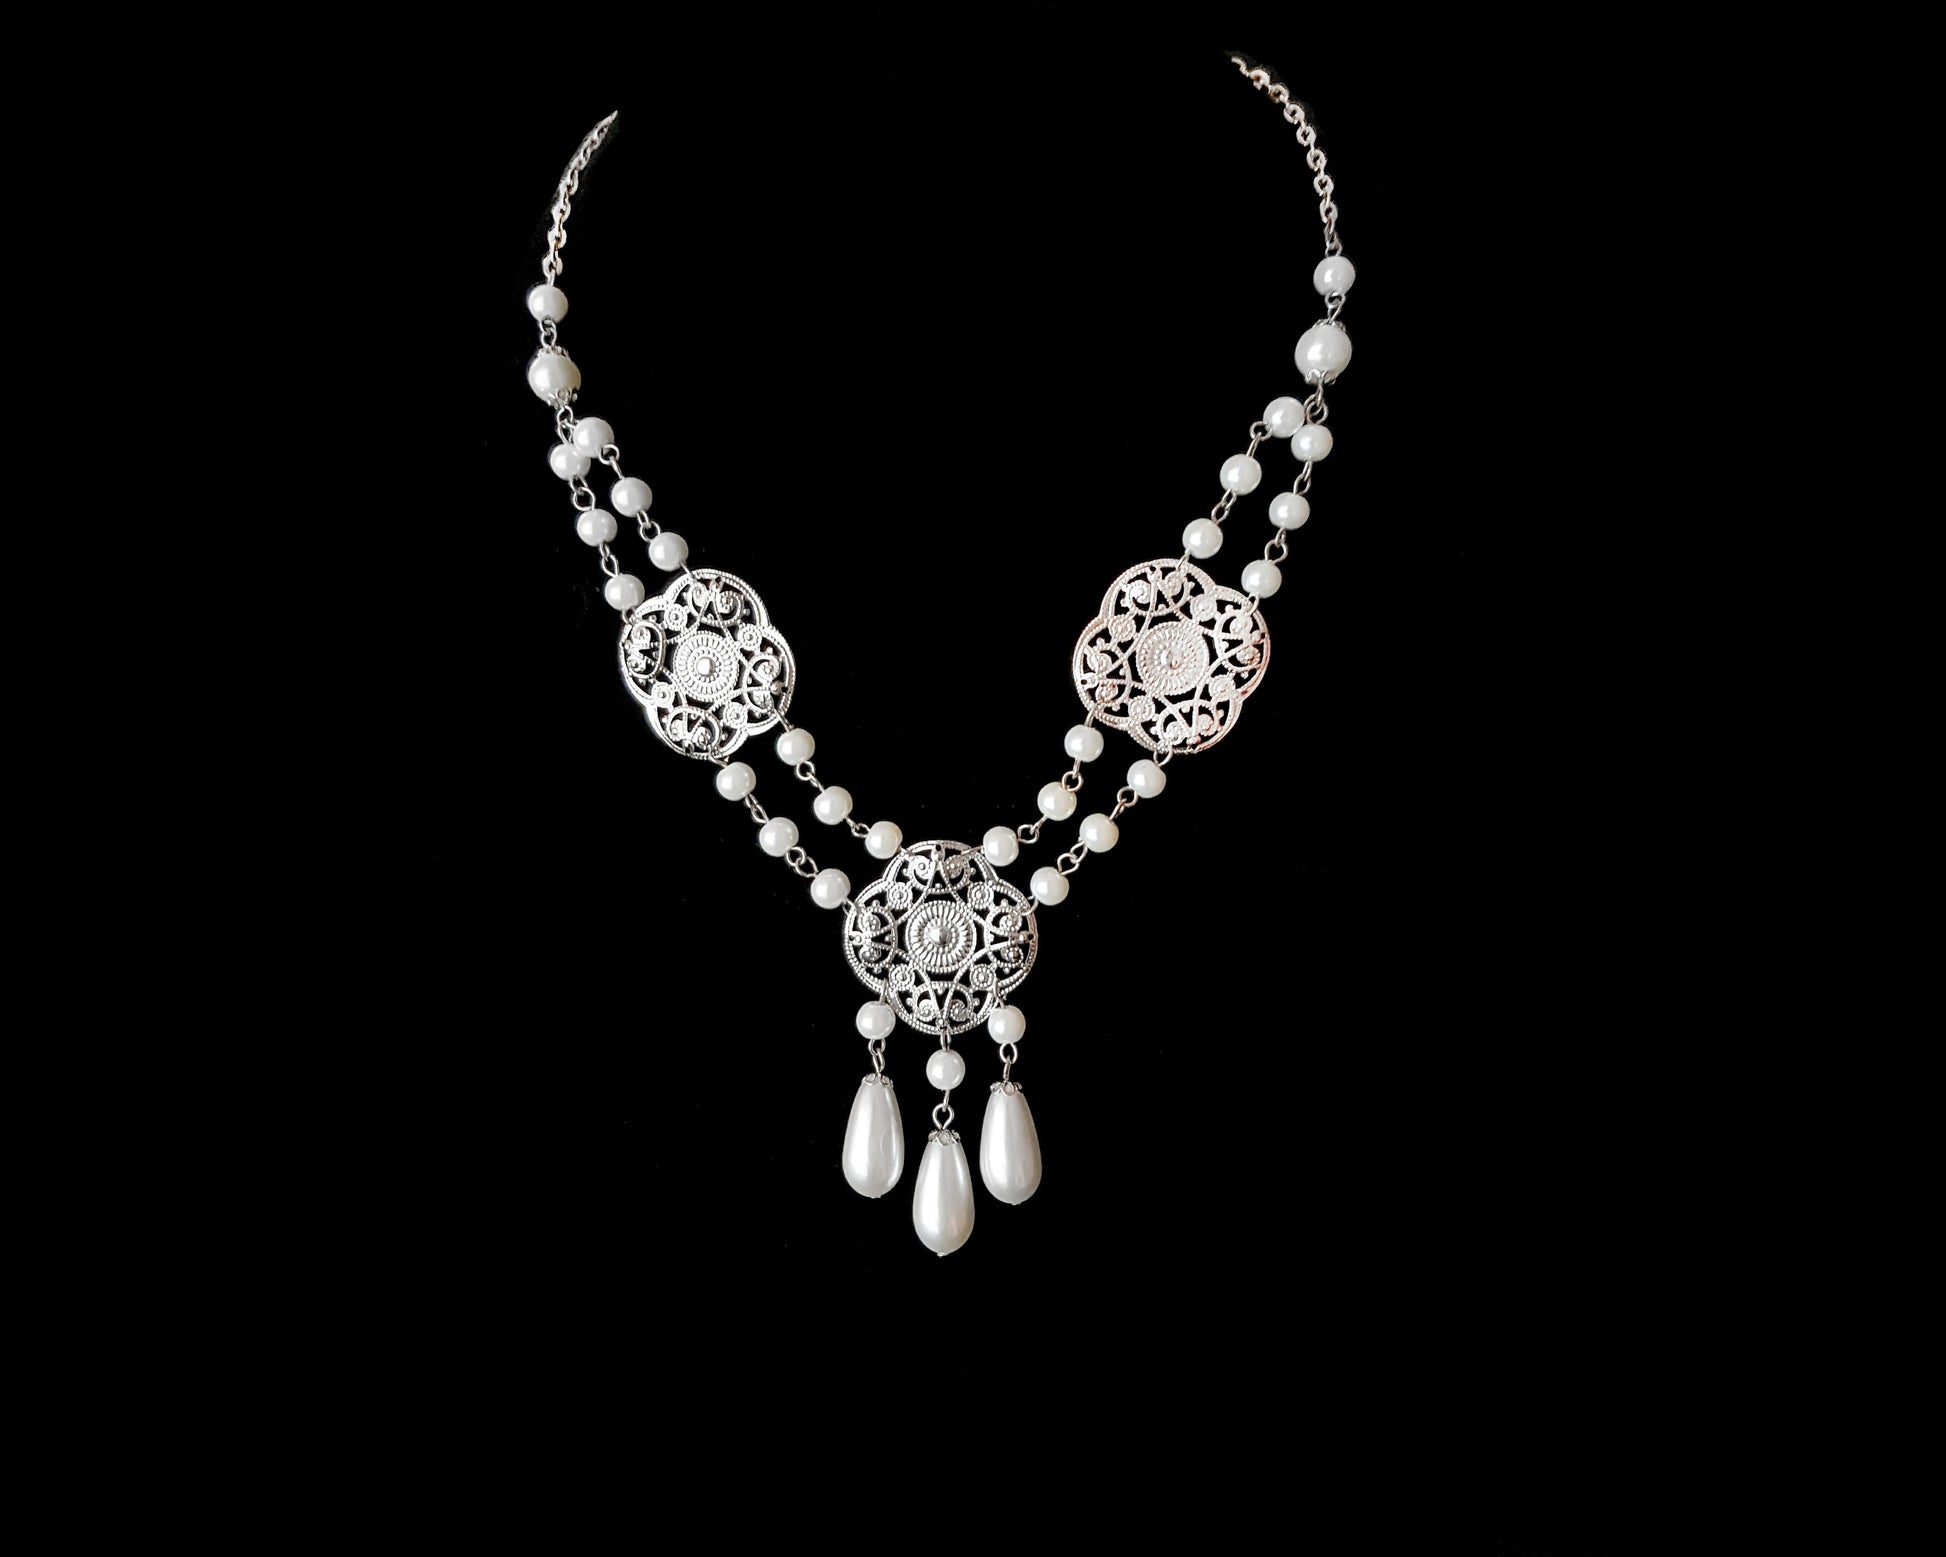 Edwardian Style Pearl Festoon Necklace-White Pearls-White Gold Finish